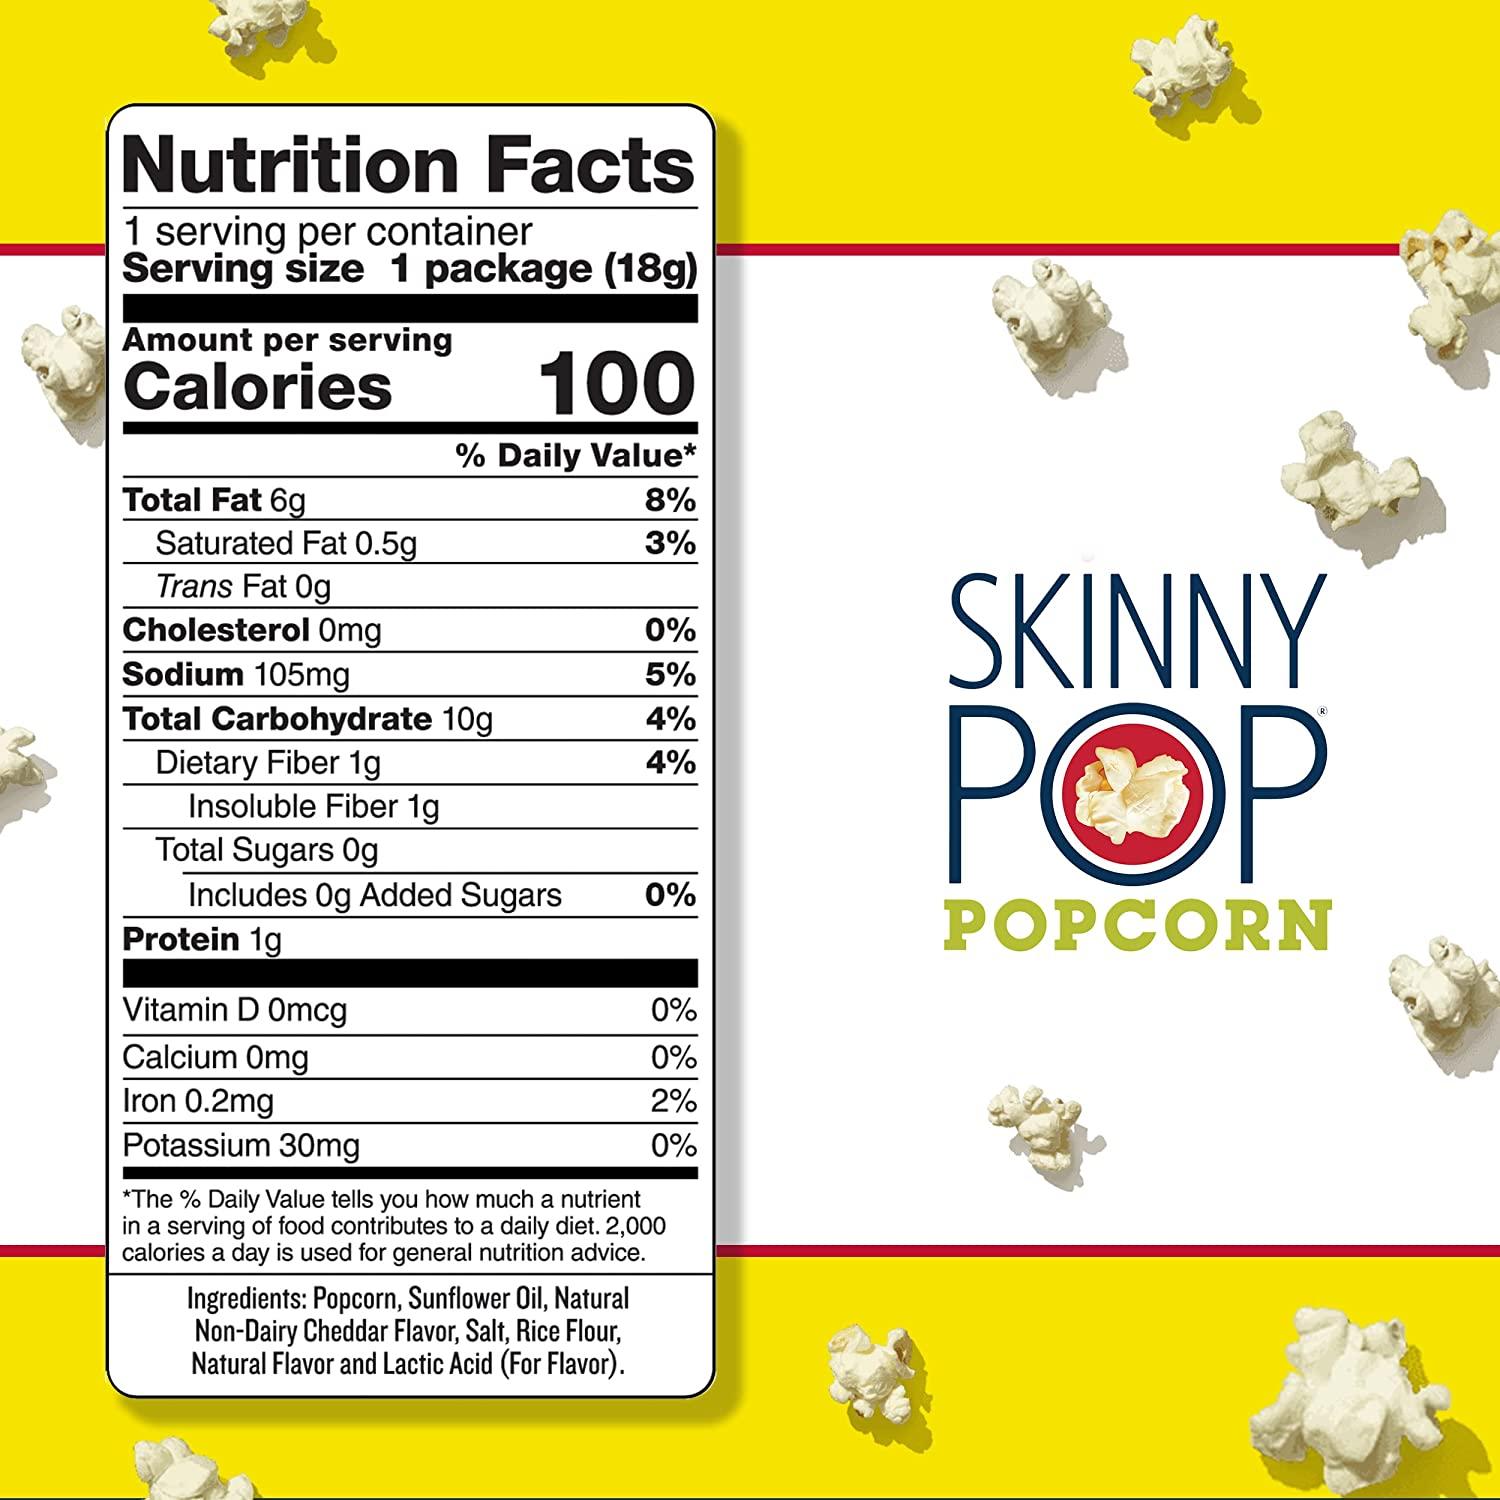 Skinnypop Popcorn Skinny Pop - White Cheddar 6 Bags/0.65 oz each